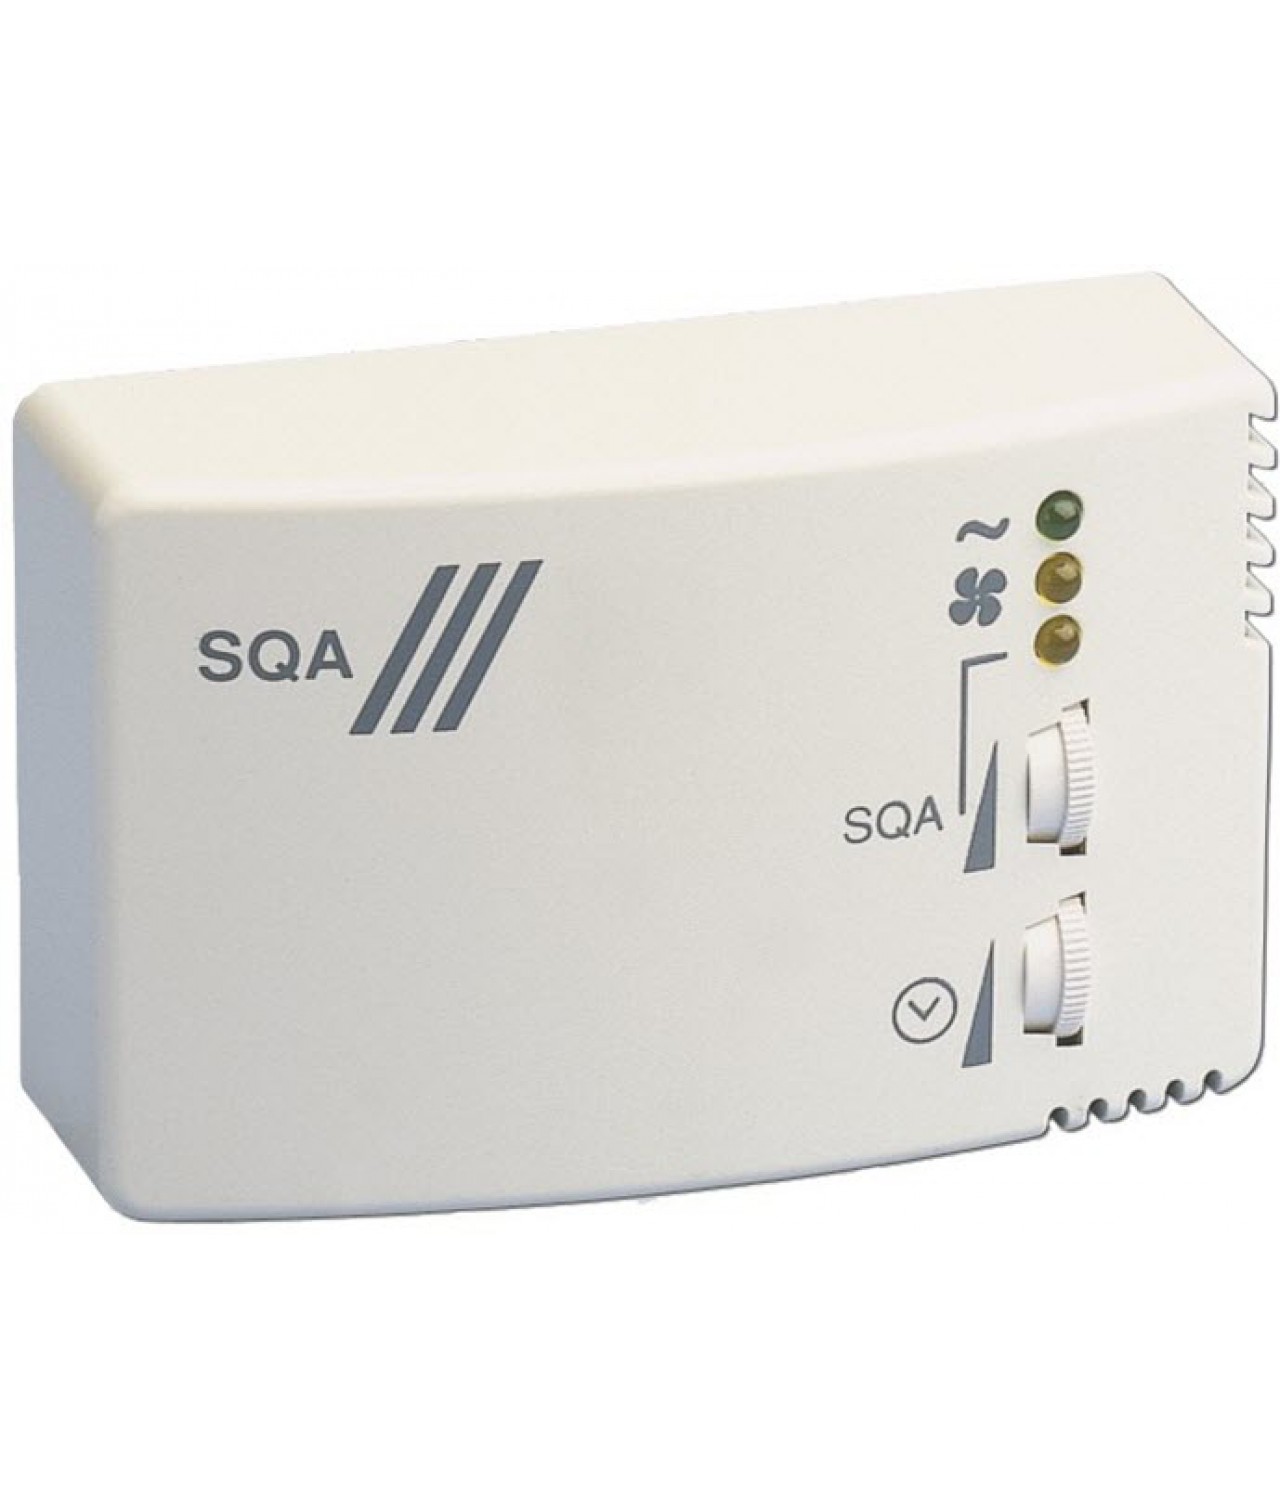 Air quality sensor with timer SQA